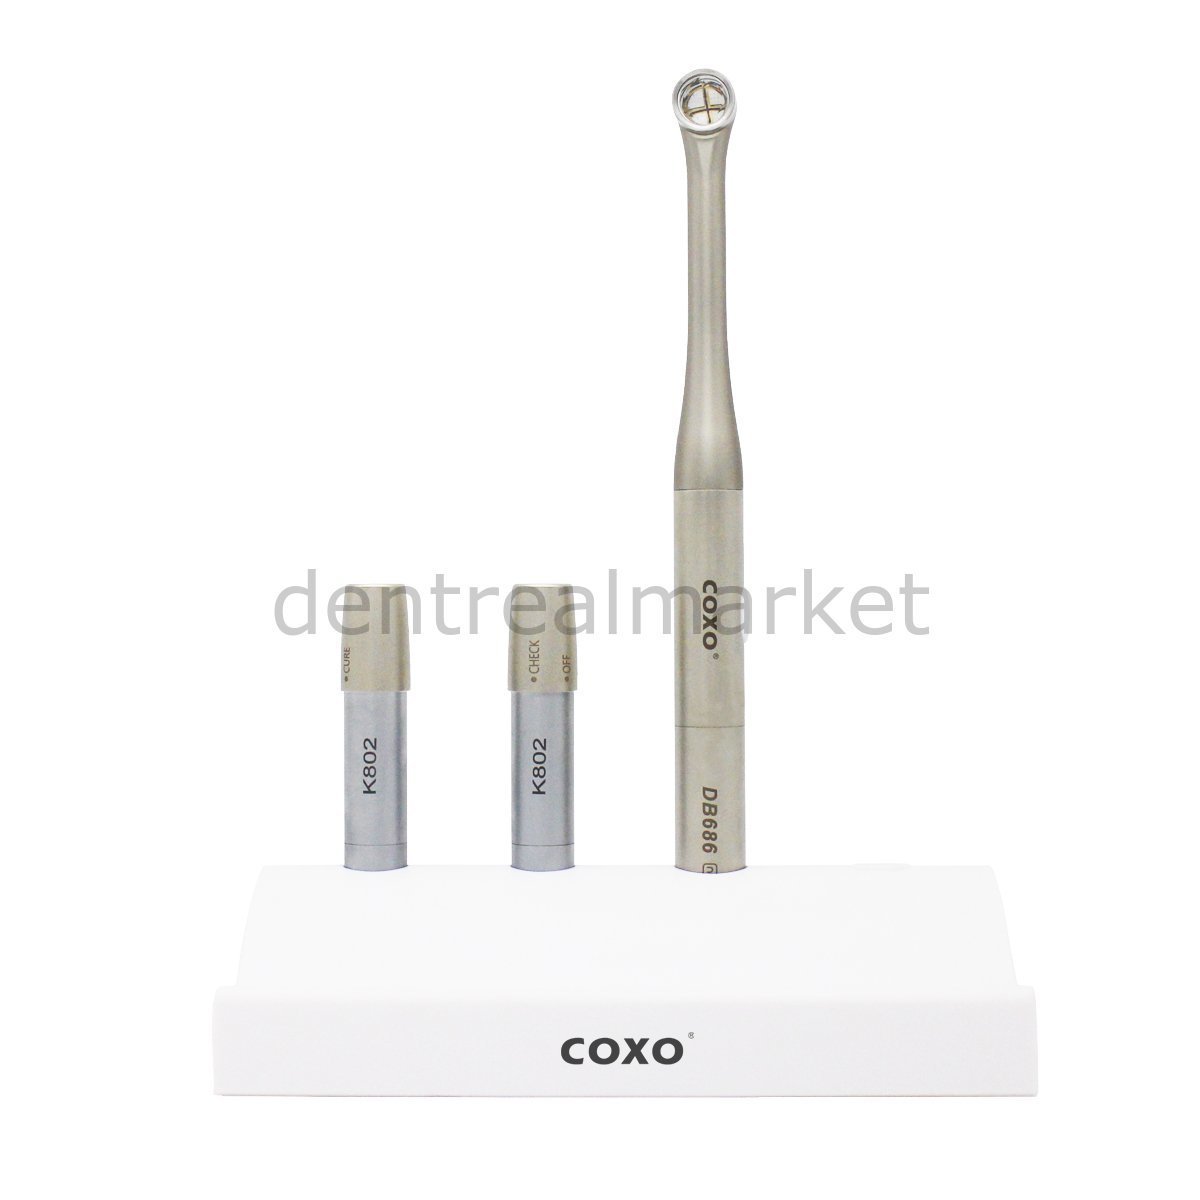 DentrealStore - Coxo Nano Polymerization Device - Metal Body